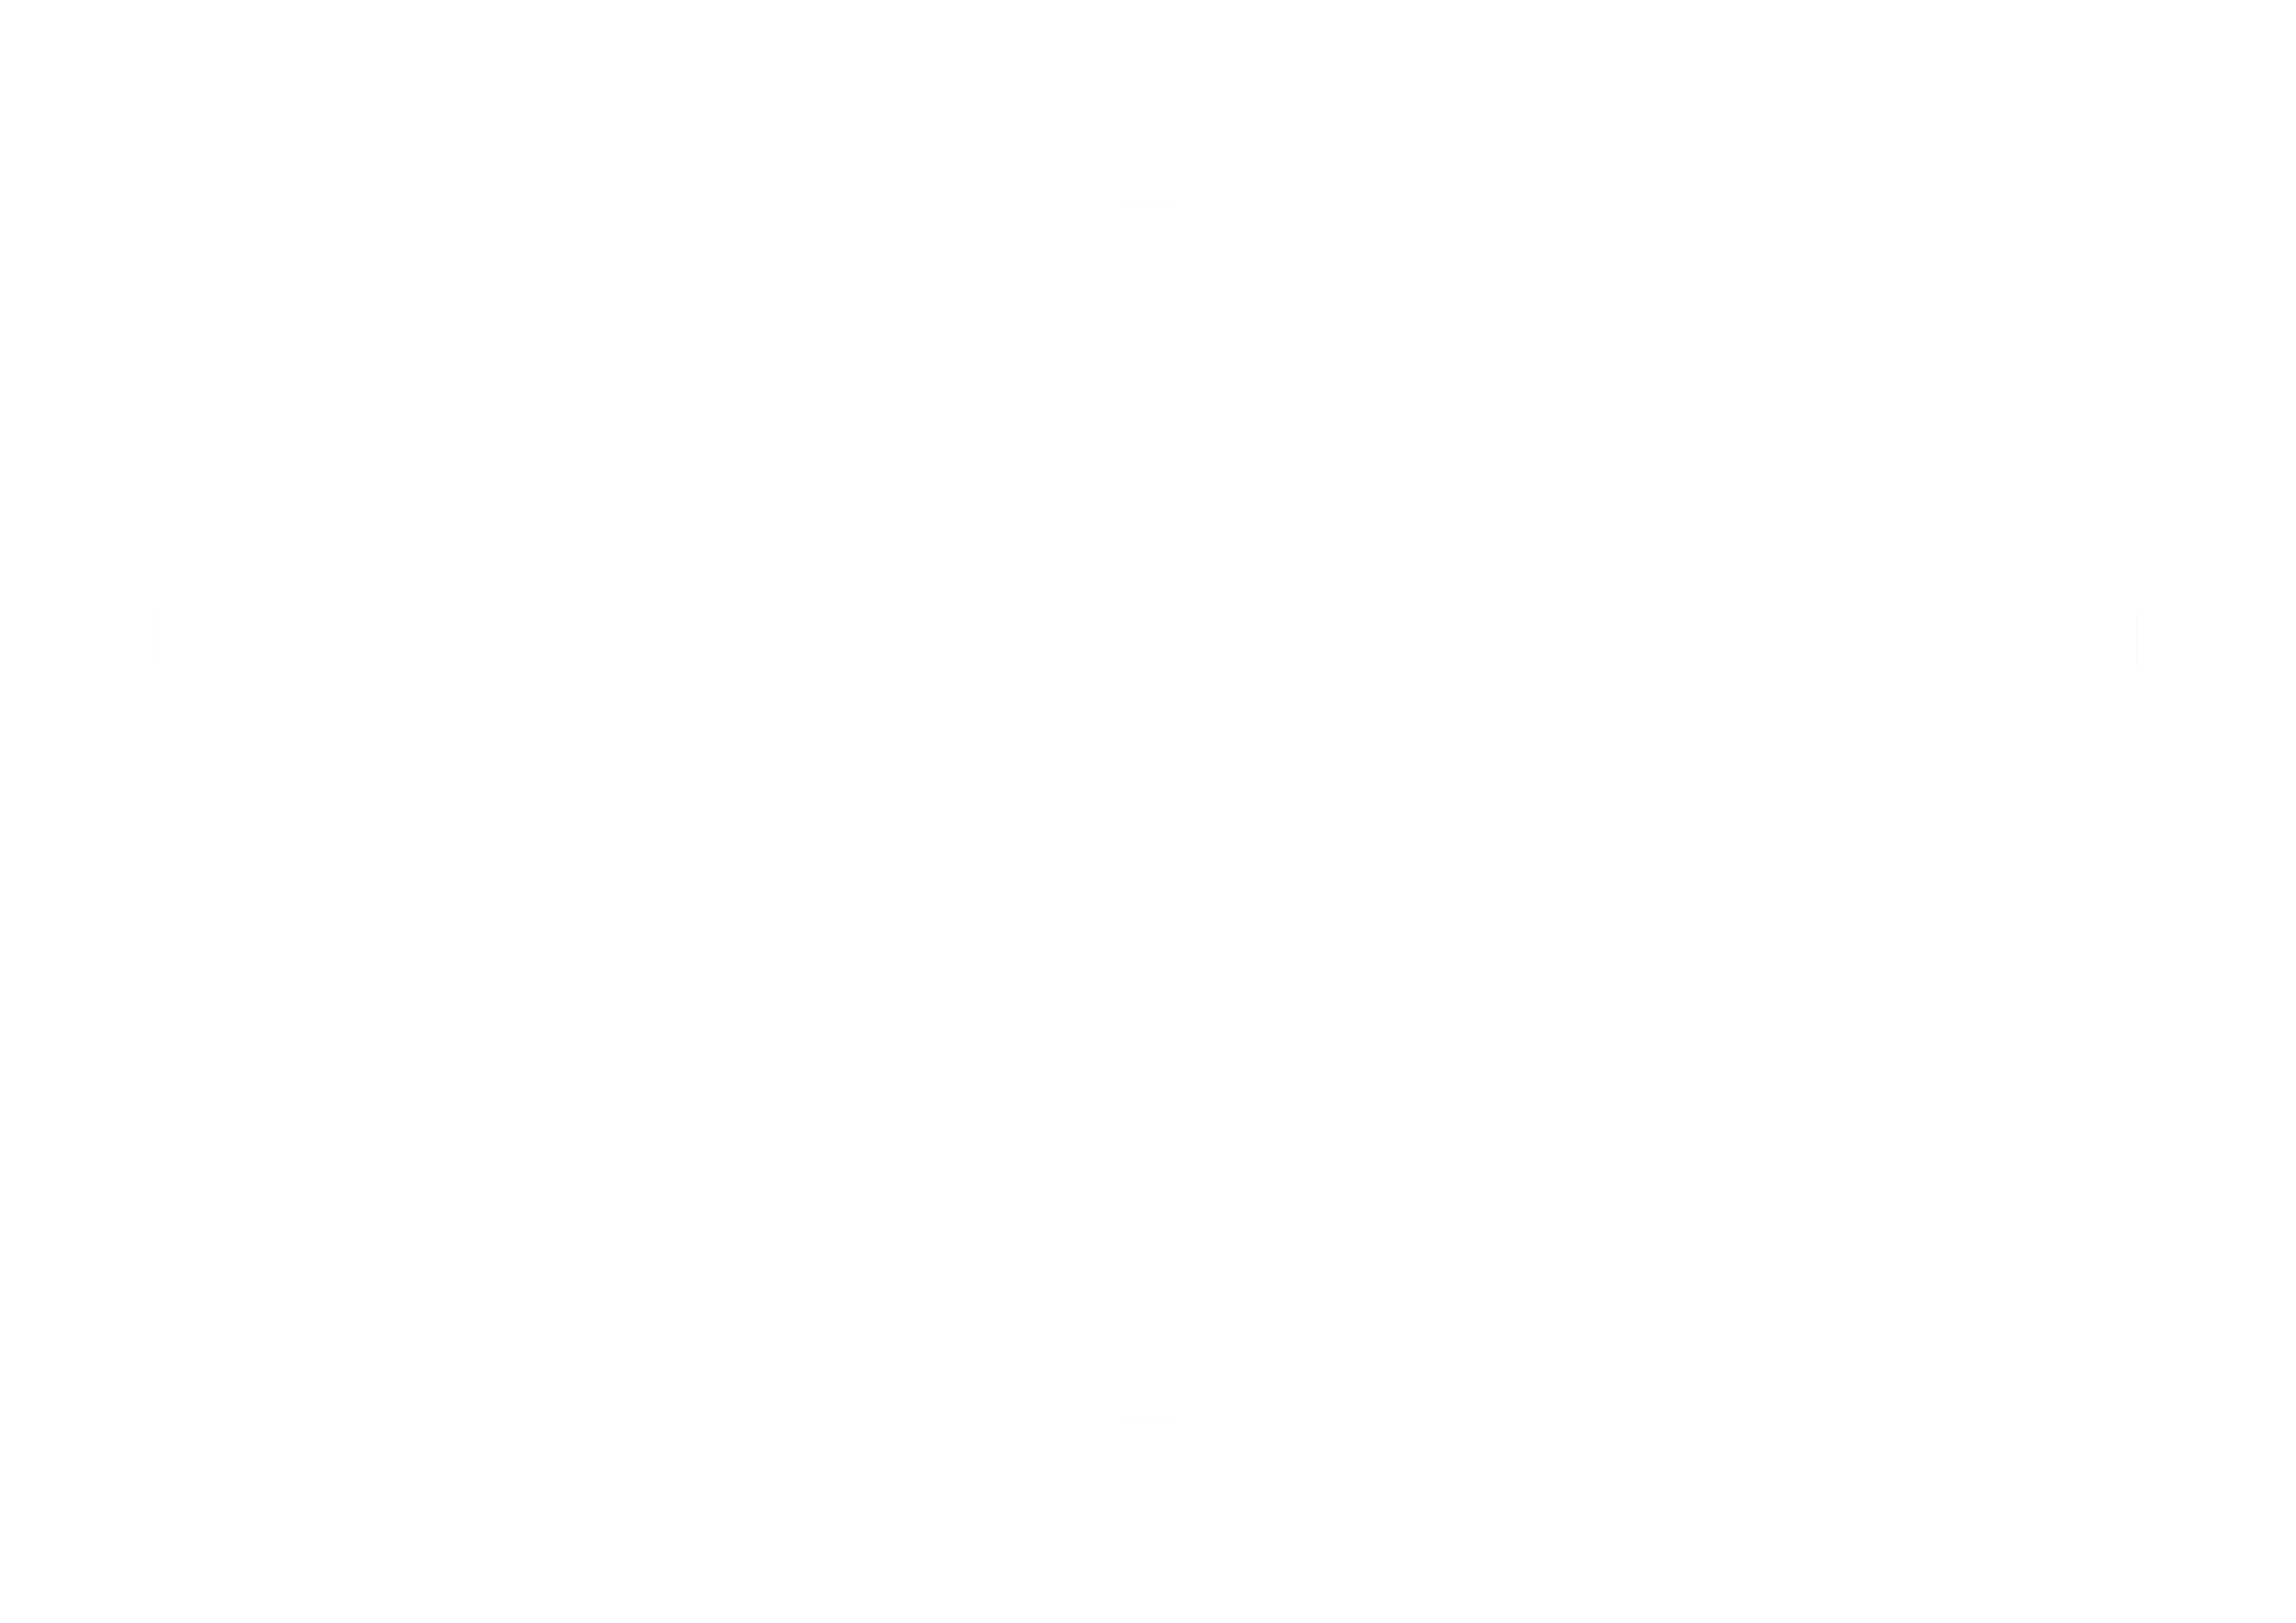 Route Resurrection since 2014 oscuro white